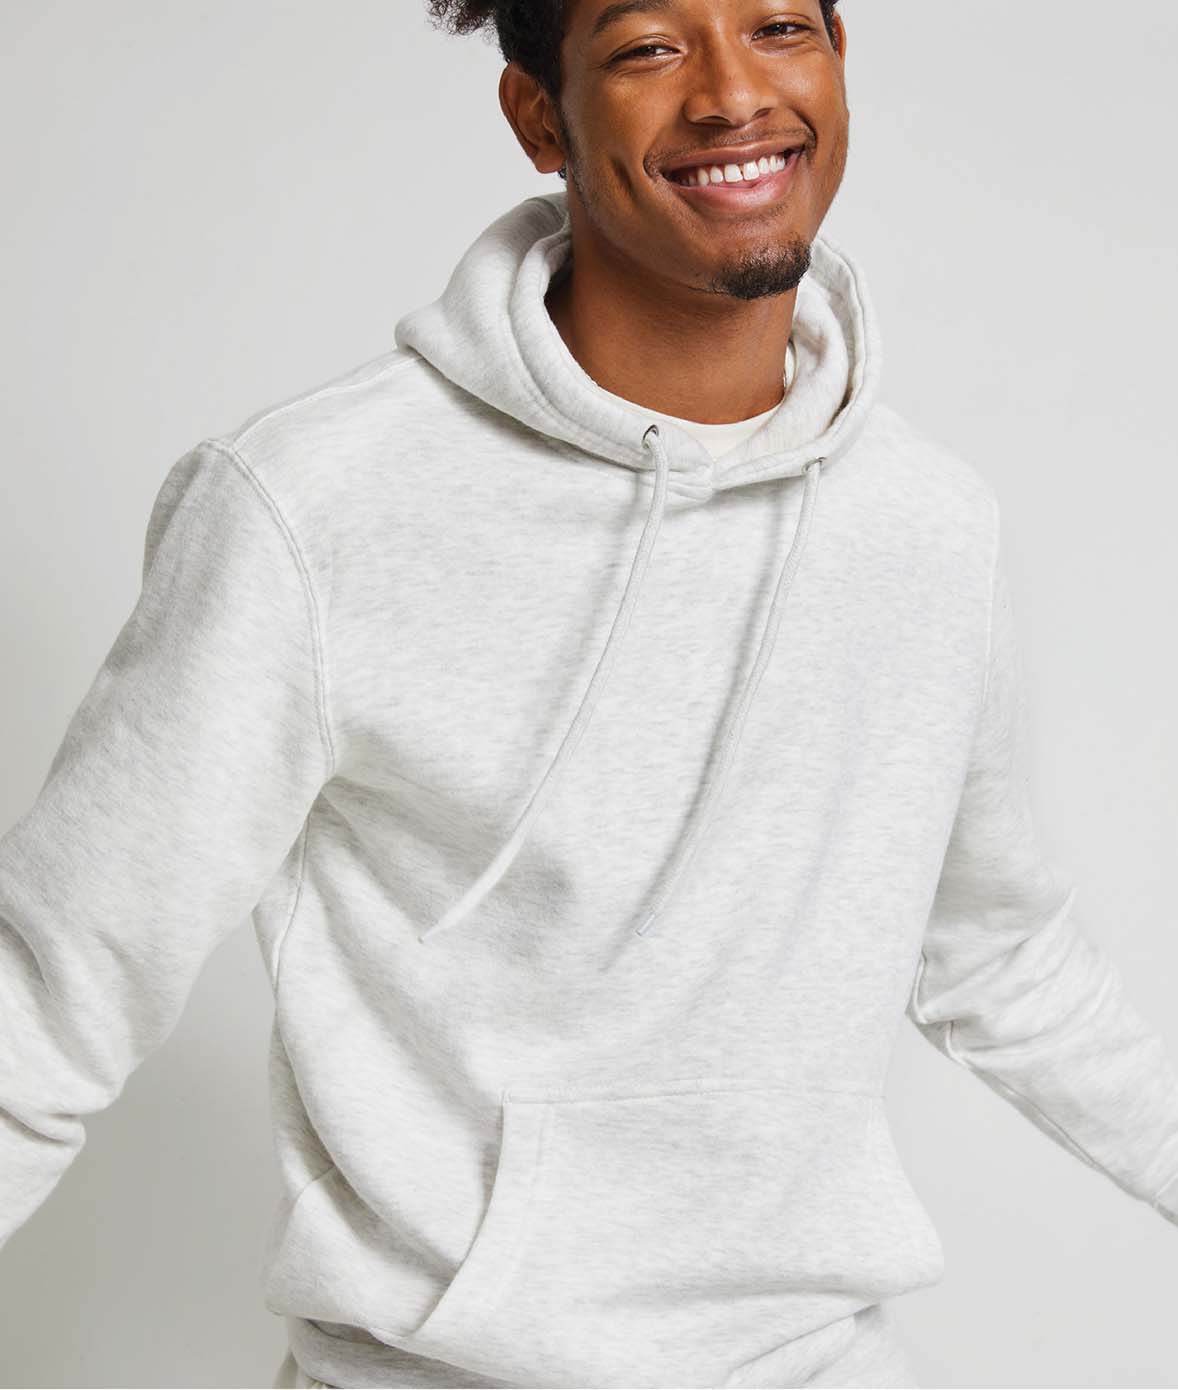 Men's Midweight Premium Pullover Sweatshirt Hoodie Worn by Model